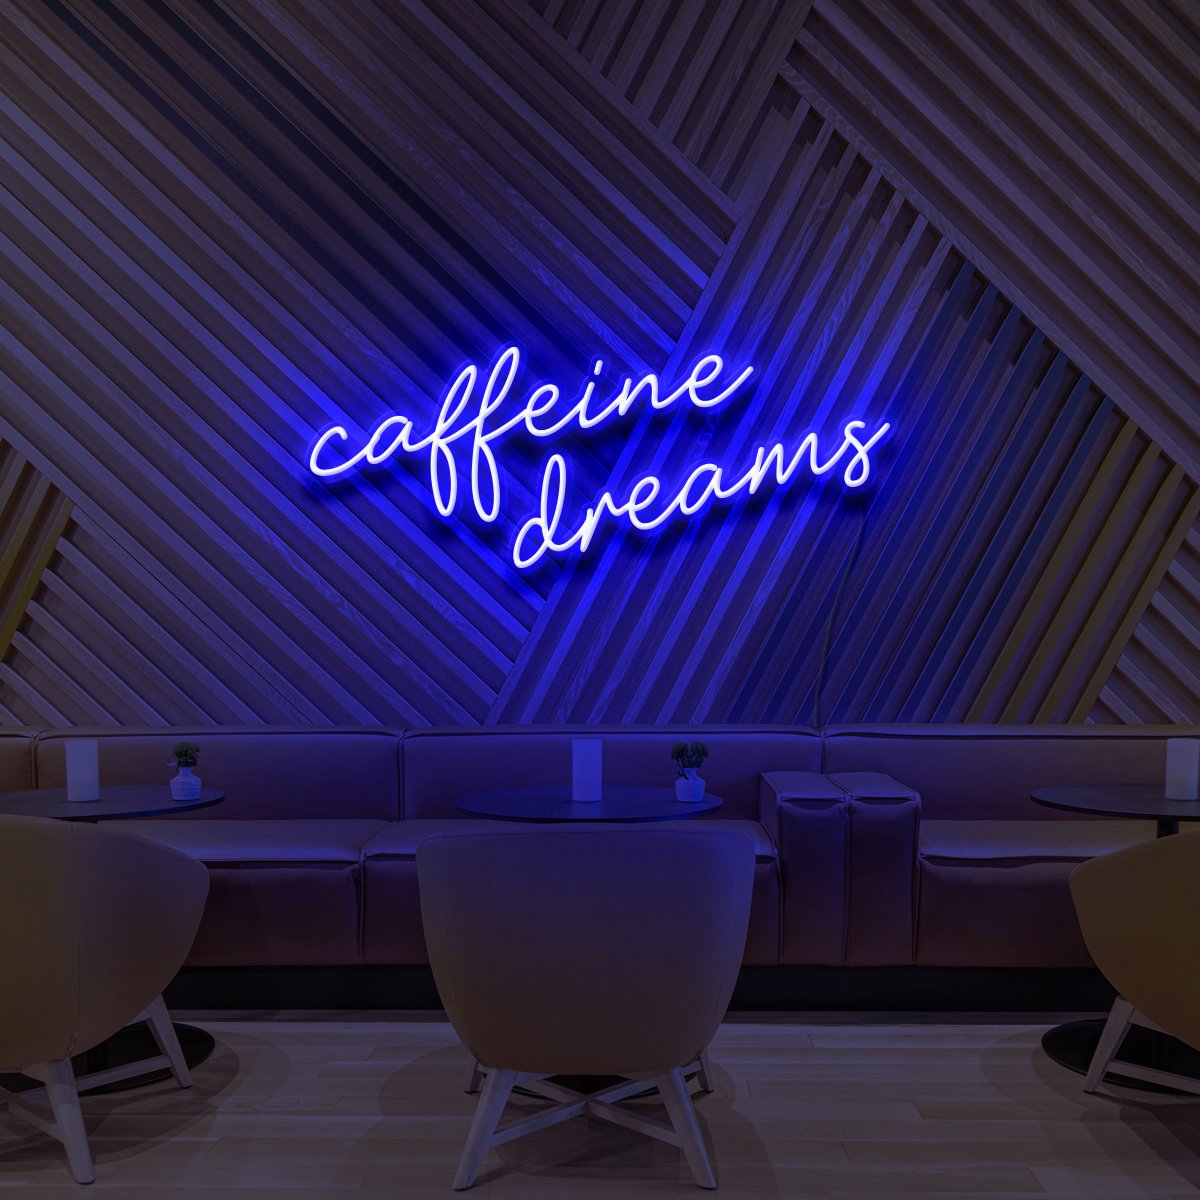 "Caffeine Dreams" Neon Sign for Cafés